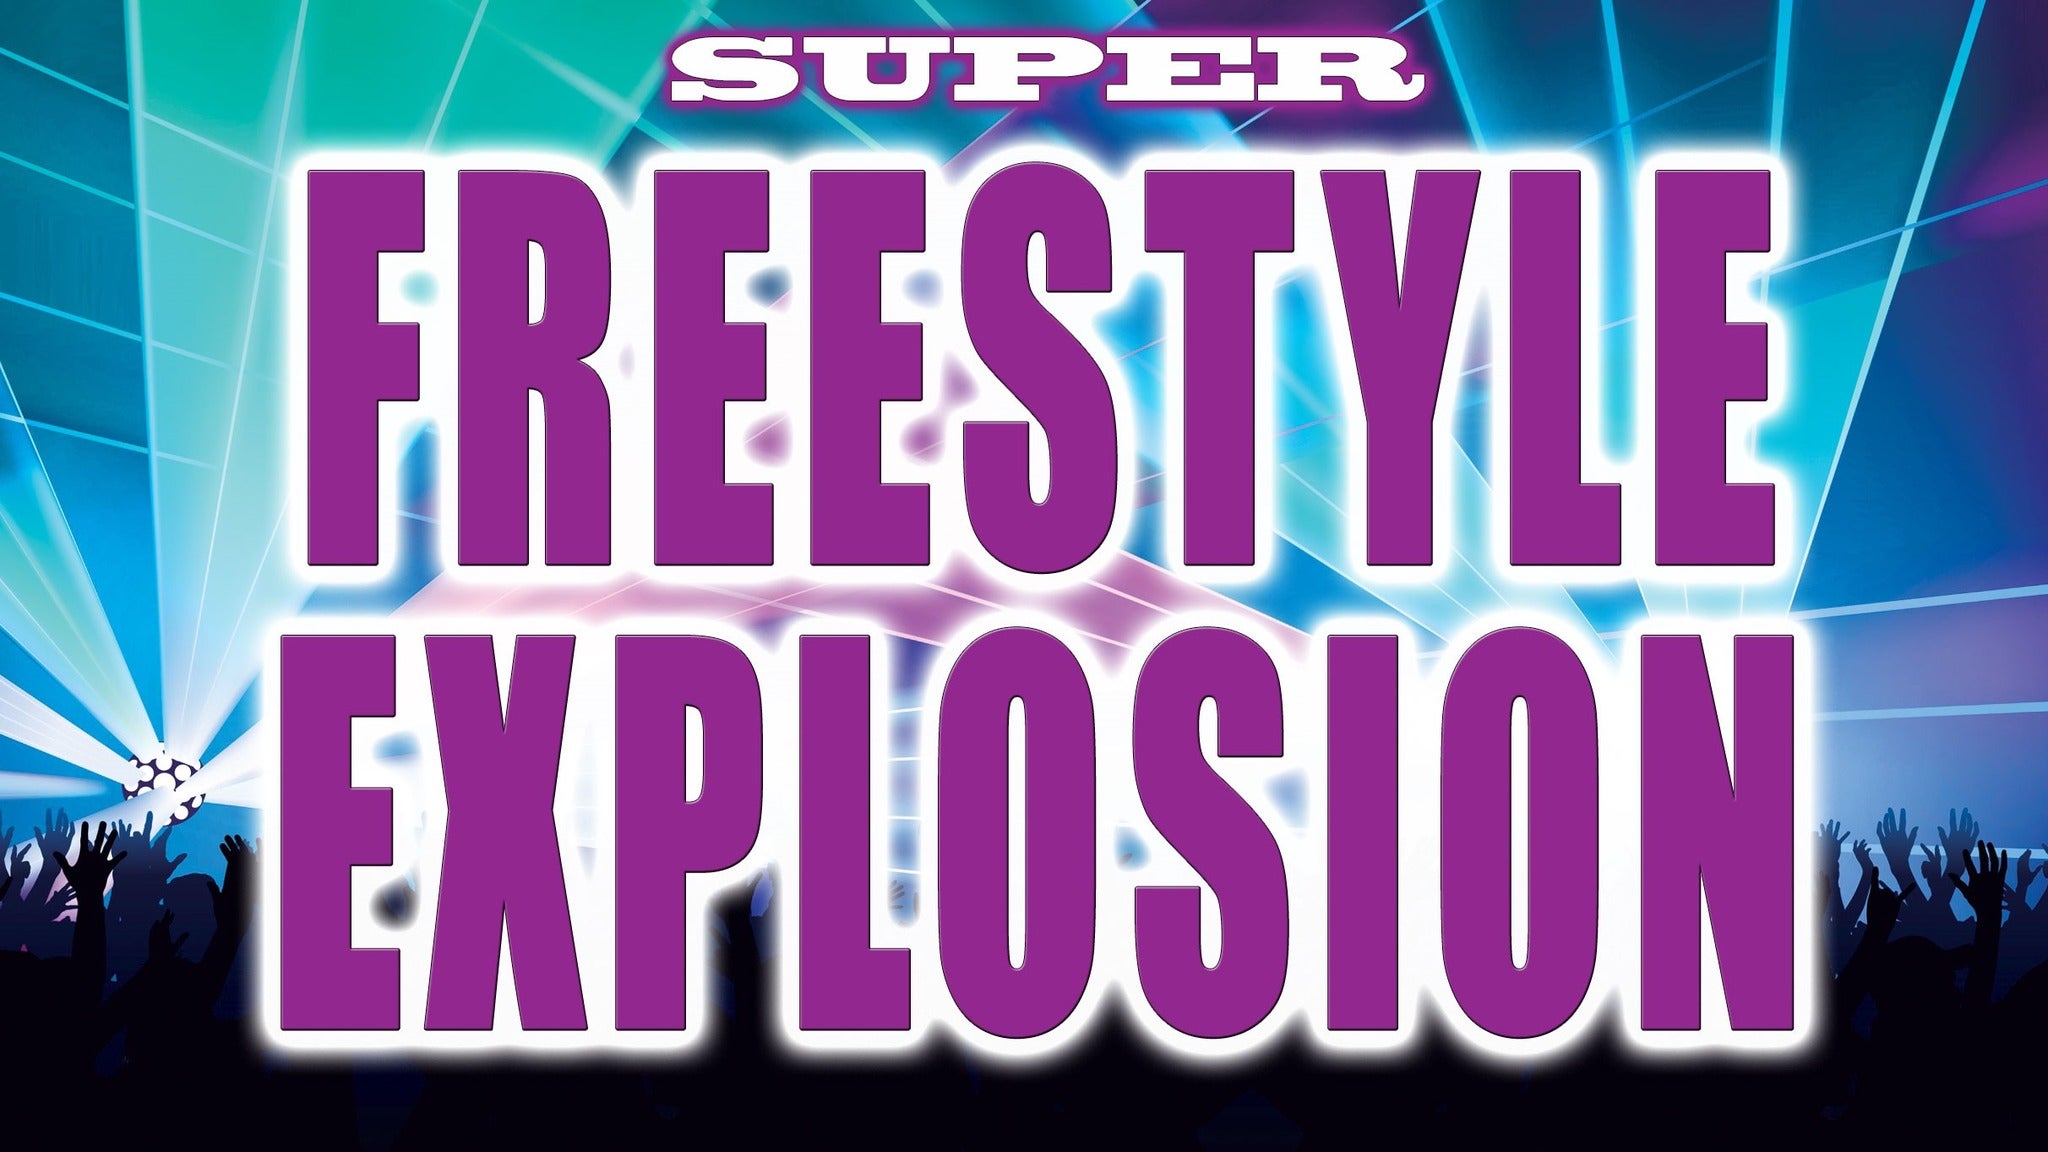 Super Freestyle Explosion Tickets, 20222023 Concert Tour Dates